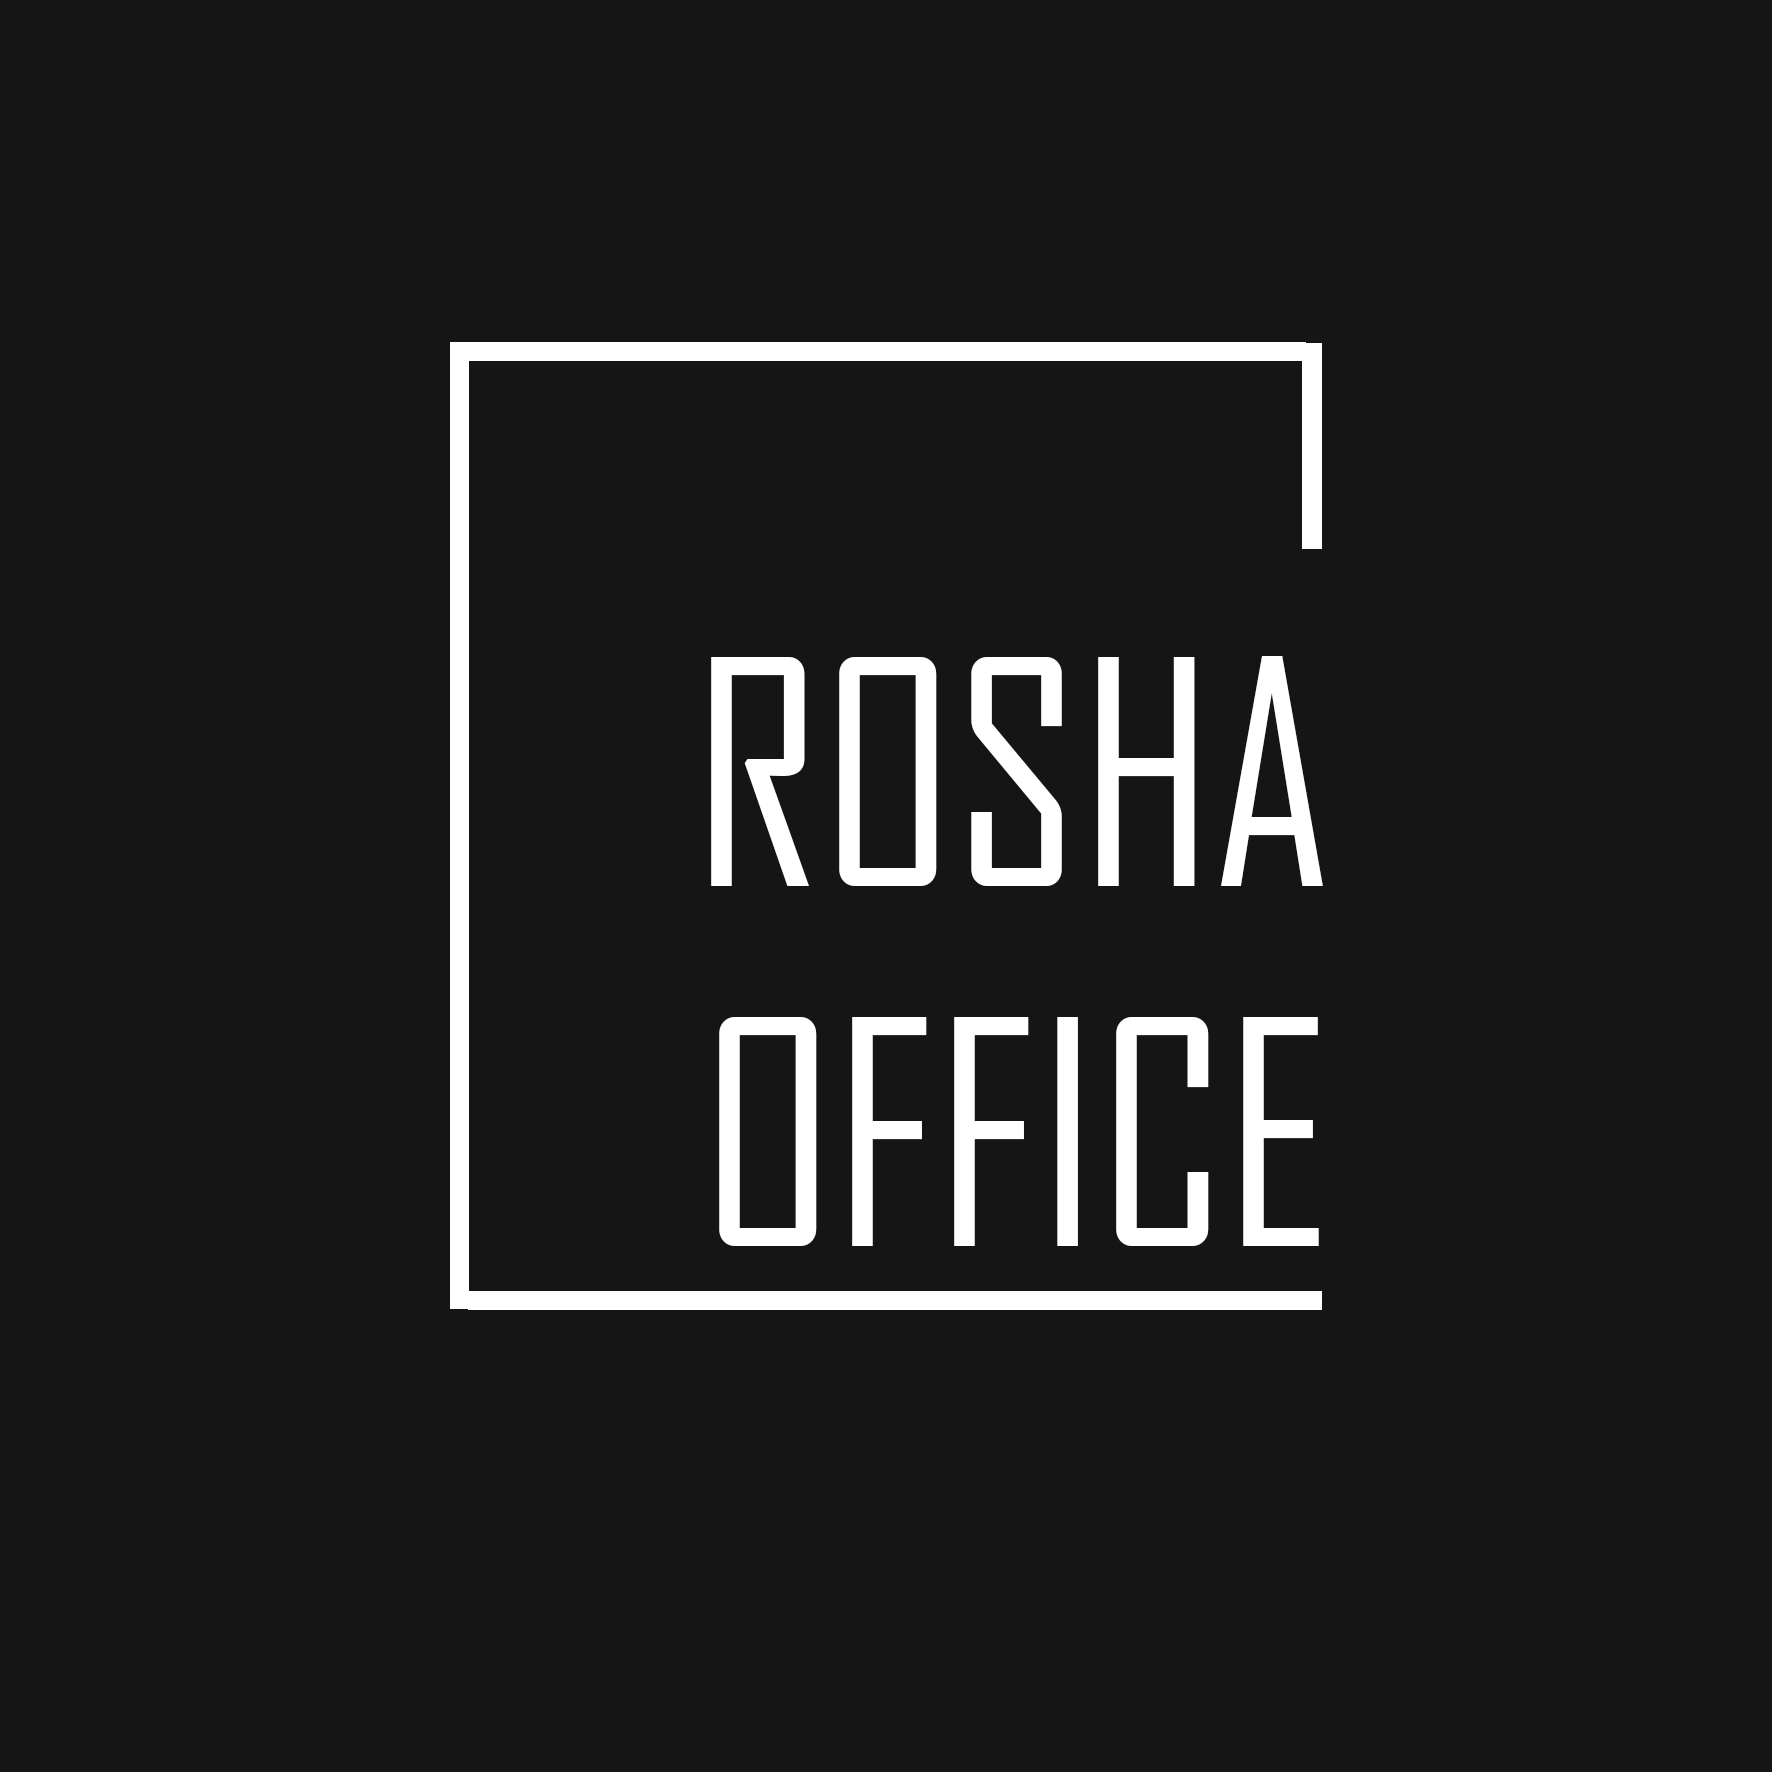 ROSHA OFFICE